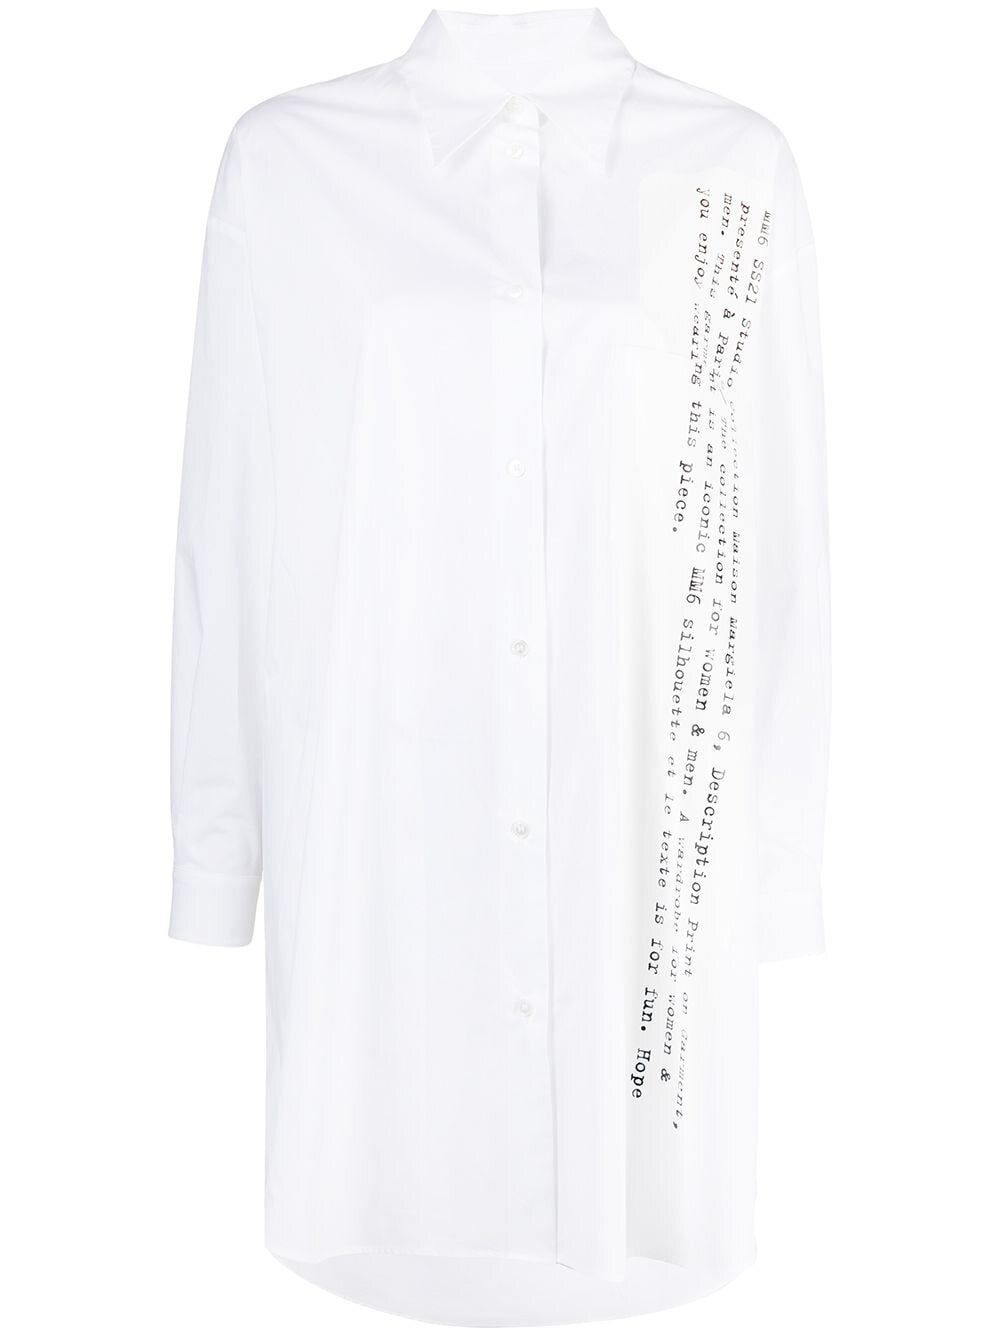 WHITE ARCHIVE PRINT SHIRT DRESS